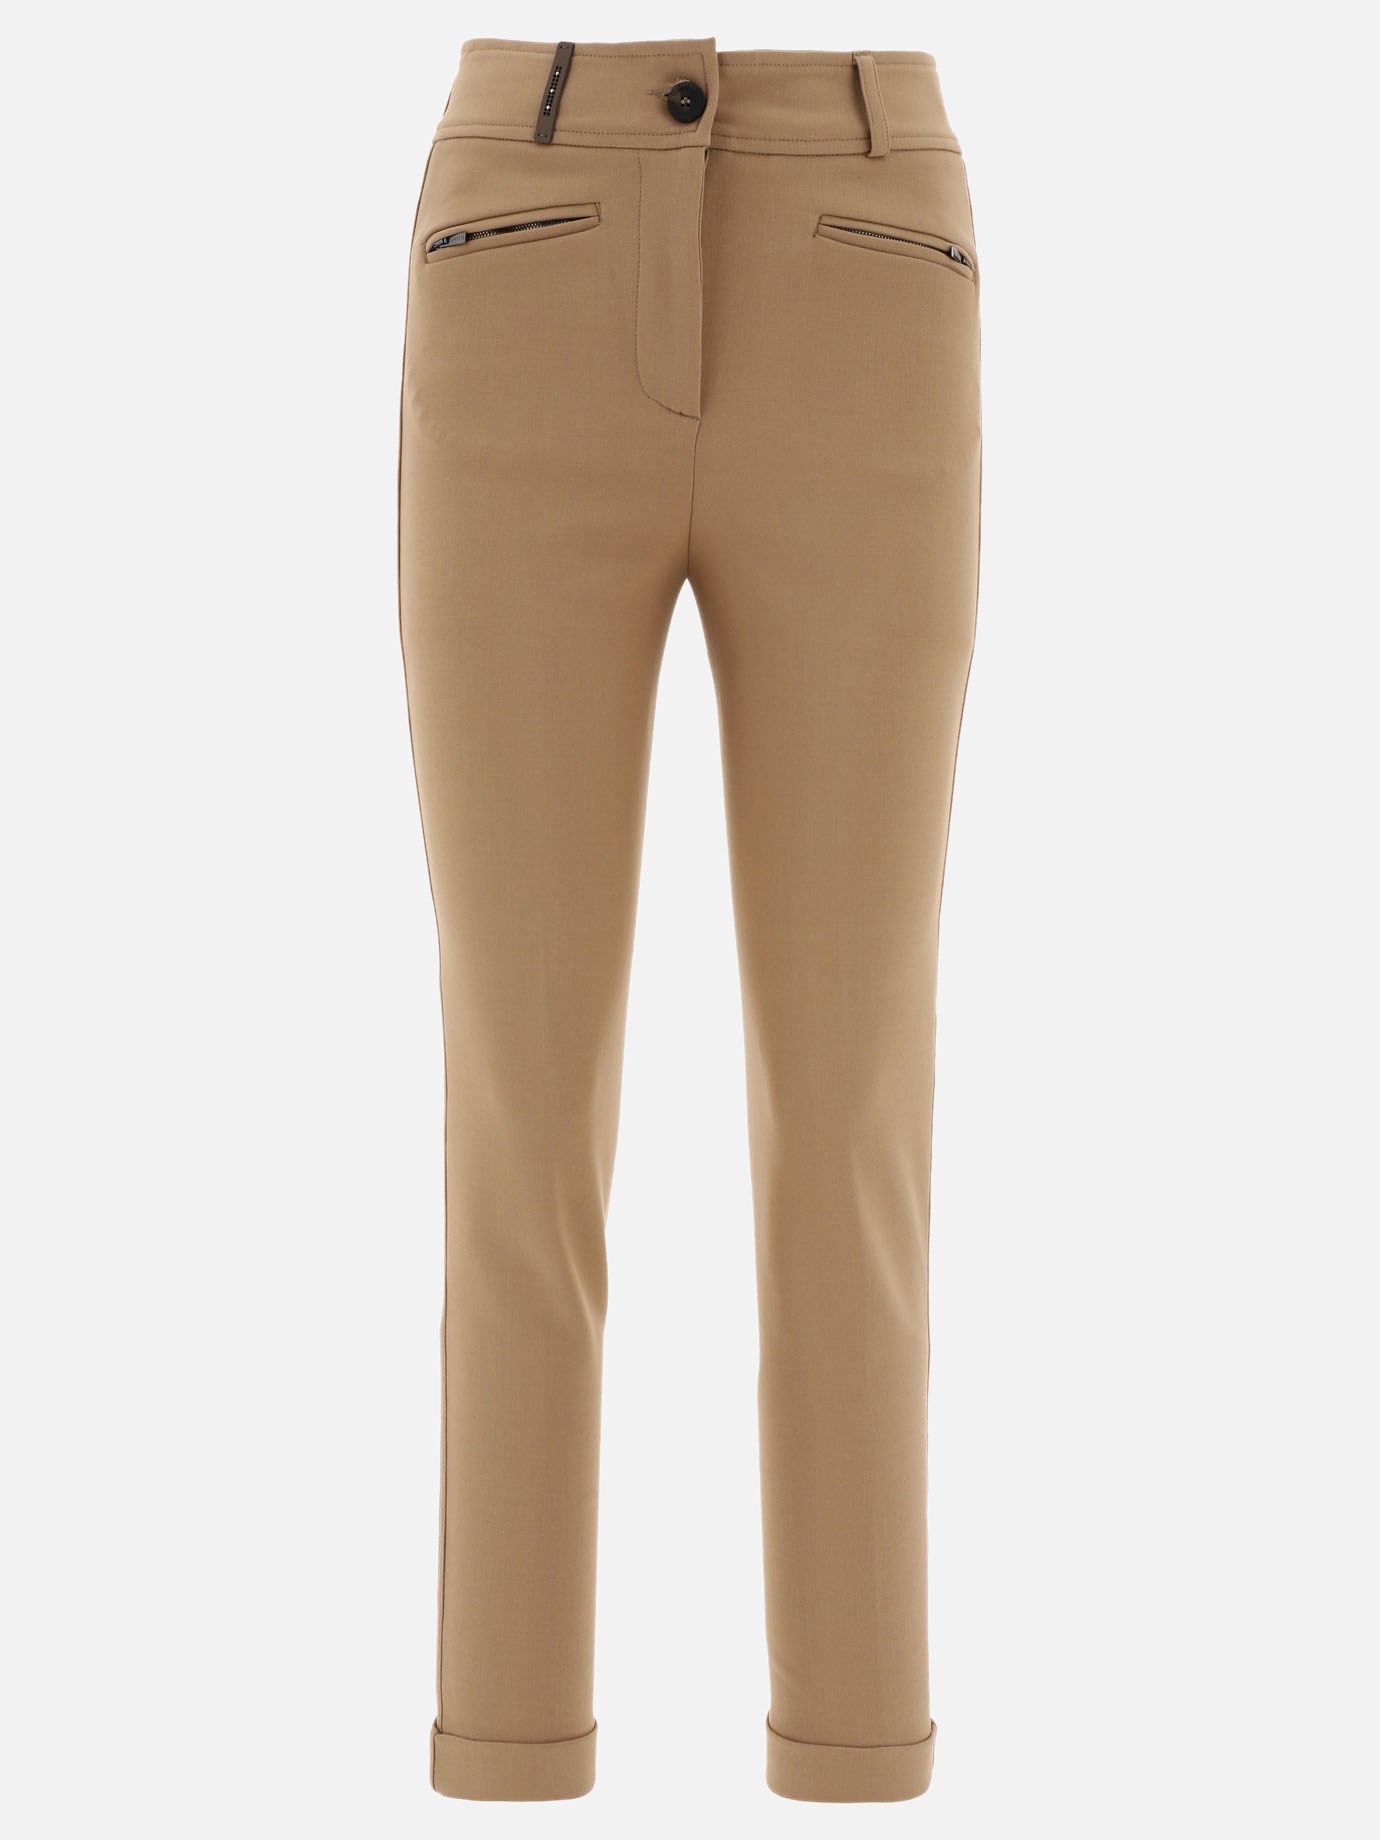 Pantalone con tasche zipby Peserico - 2